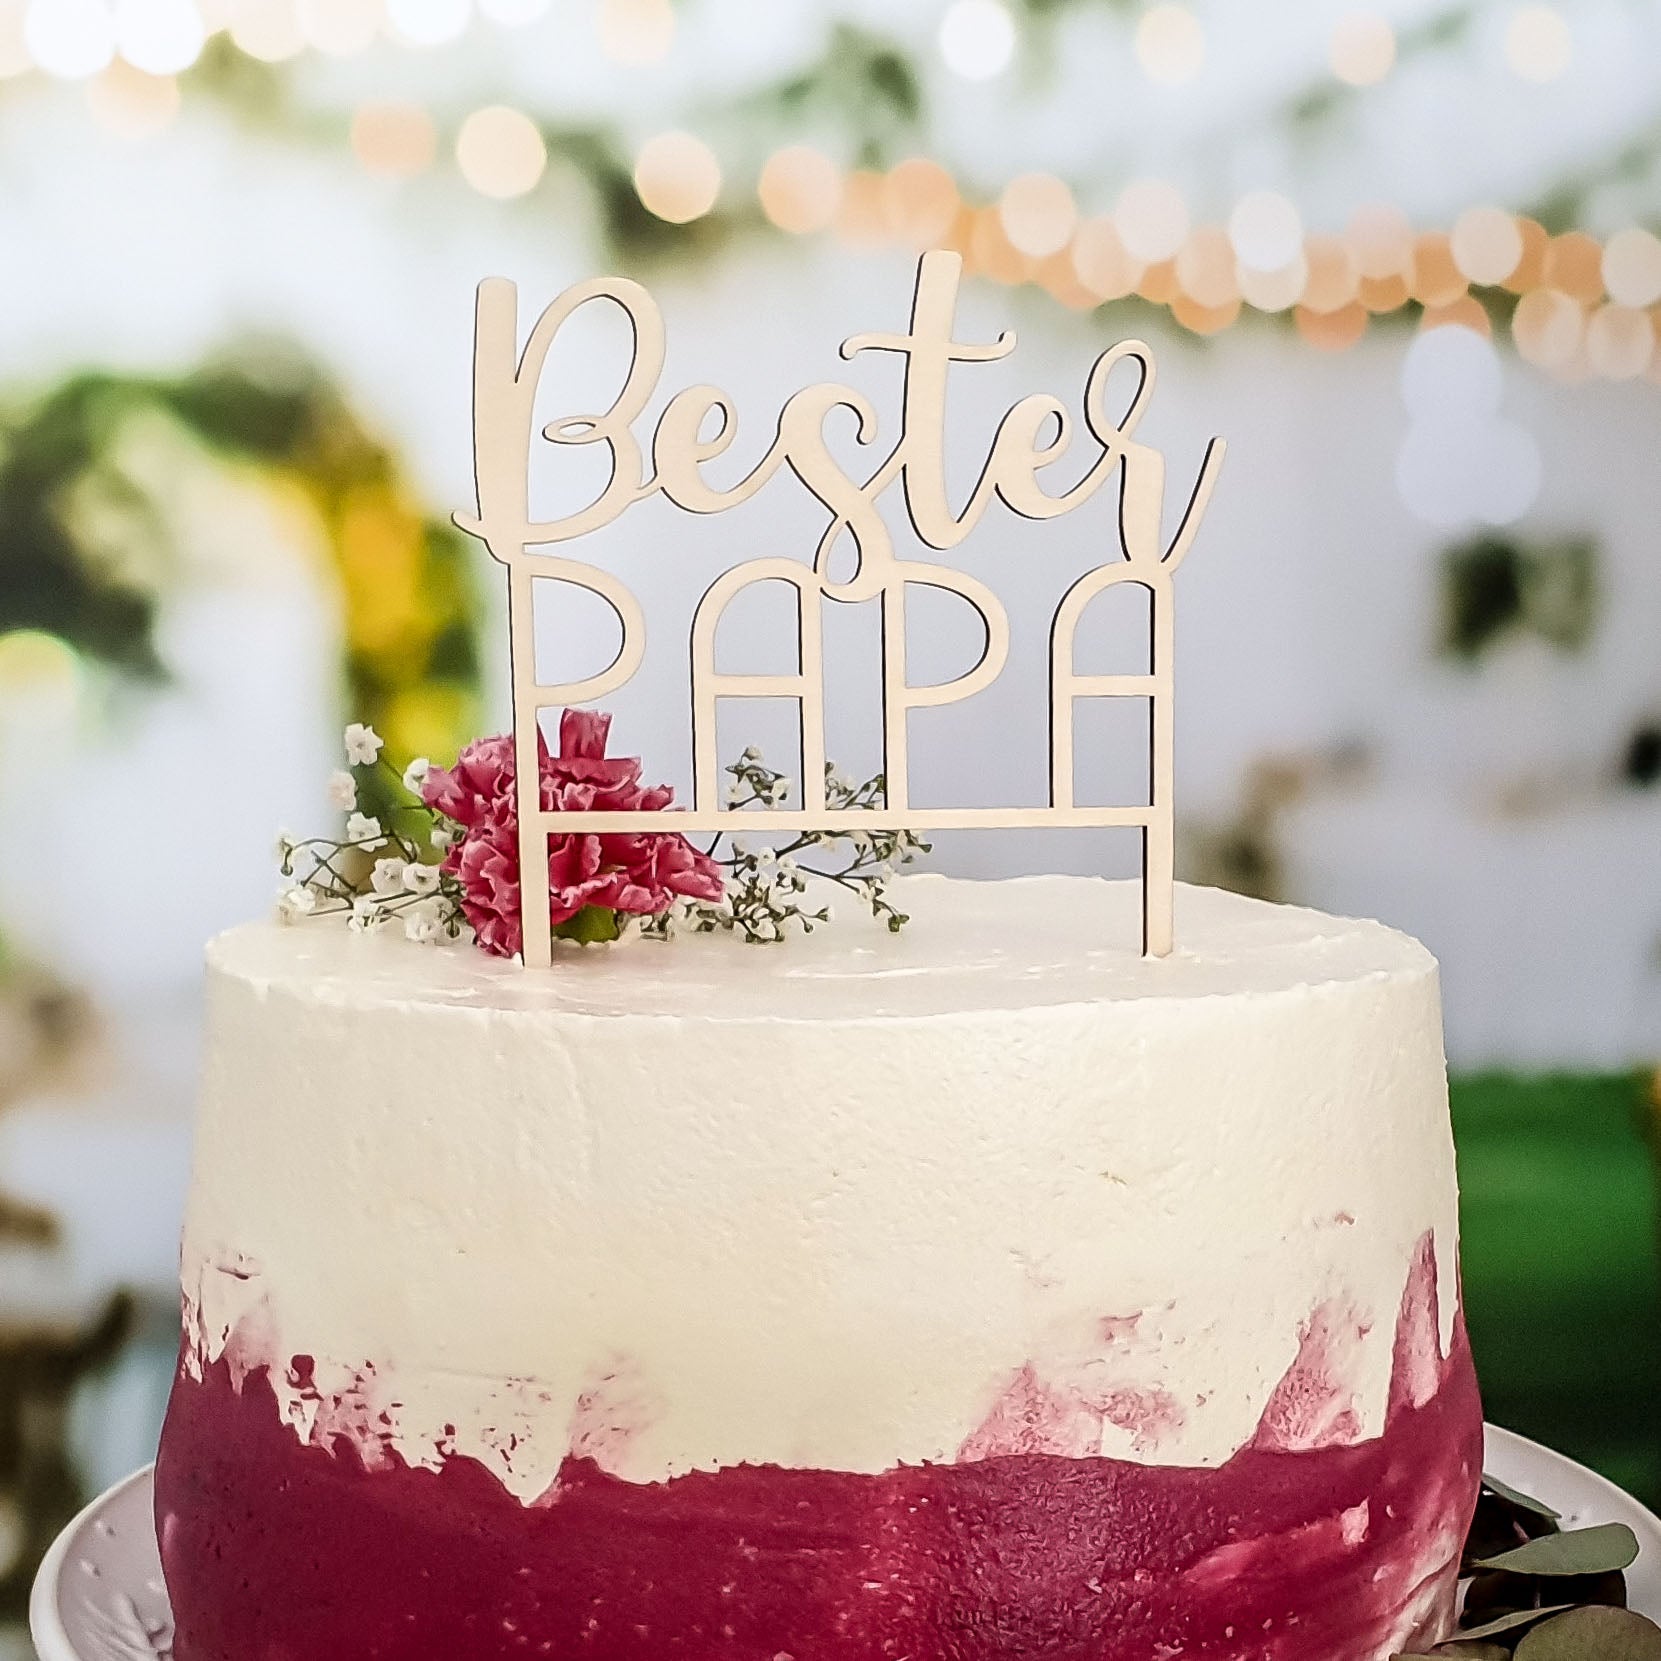 Cake Topper Bester Papa - Suzu Papers